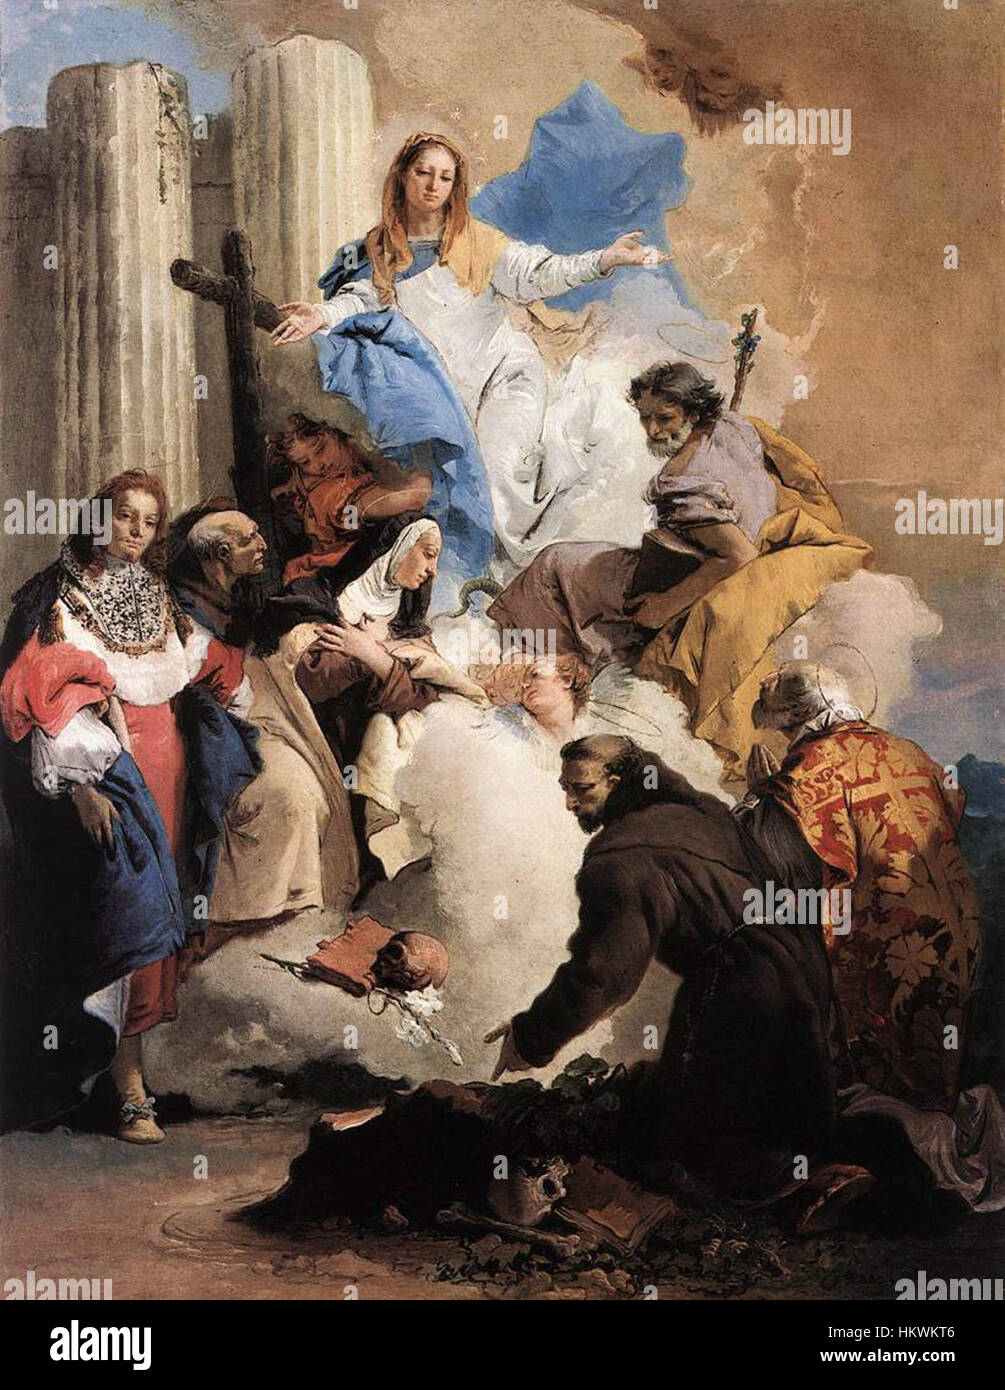 Giovanni Battista Tiepolo - The Virgin with Six Saints - WGA22284 Stock Photo